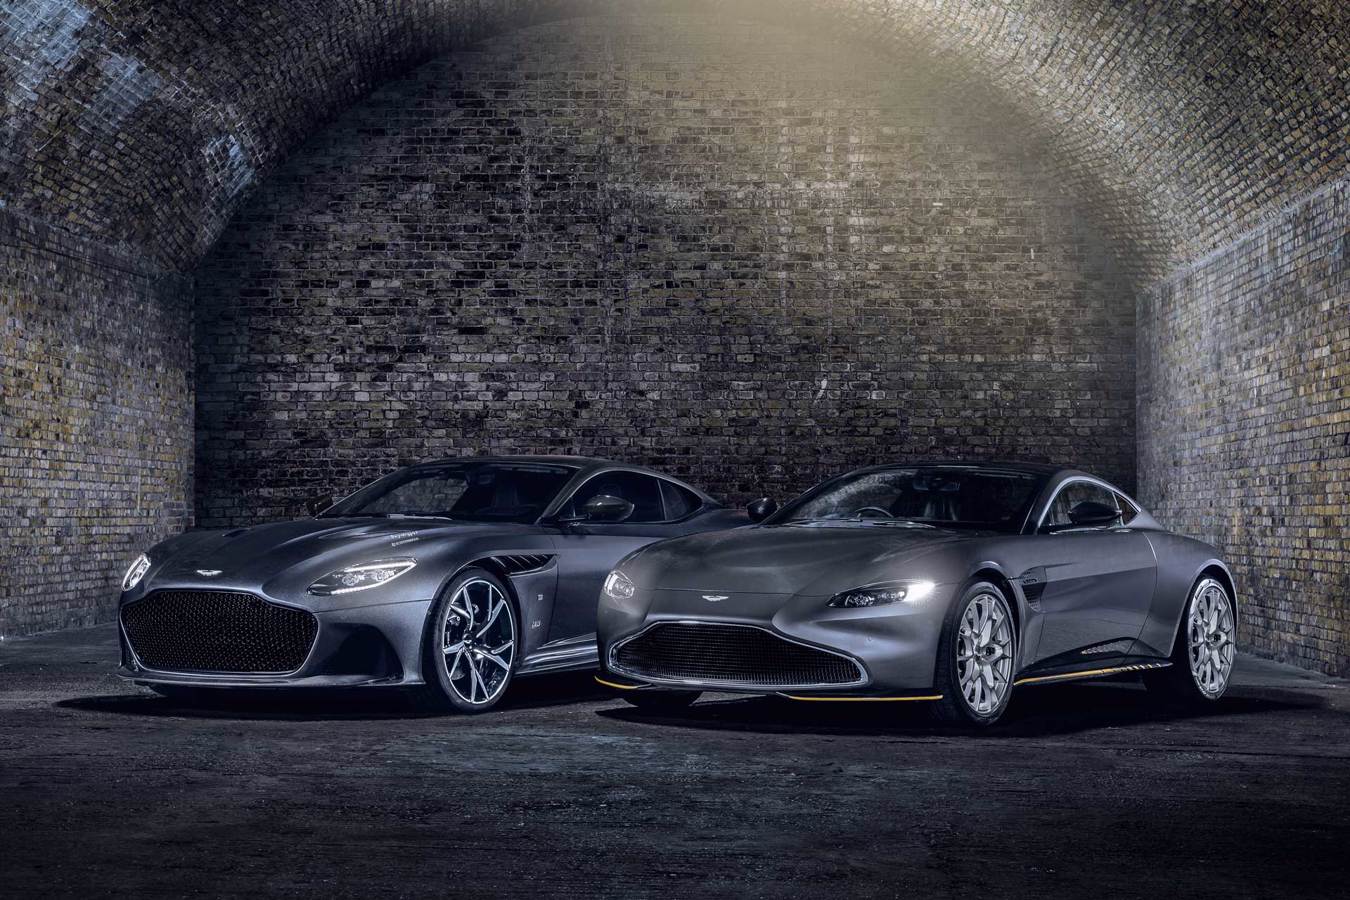 Aston Martin Vantage 007 Edition and DBS Superleggera 007 Edition